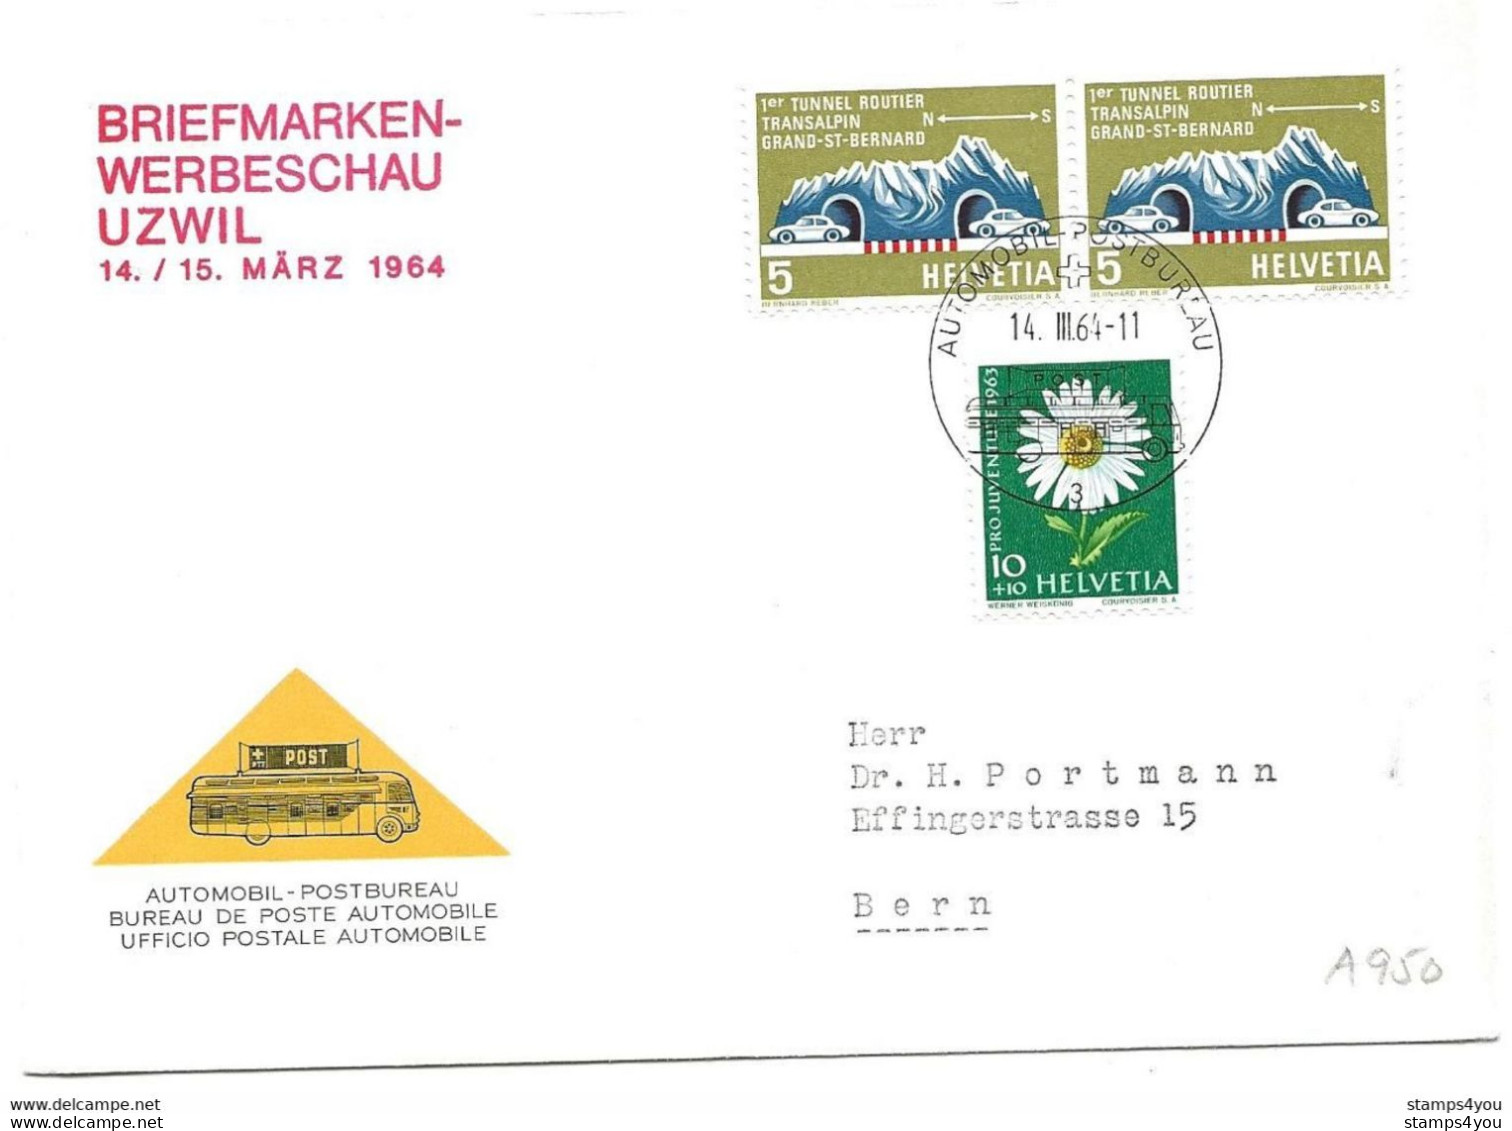 270 - 16 - Enveloppe Avec Oblit Spéciale "Briefmarken Werbeschau Uzwil 1964" - Marcofilia